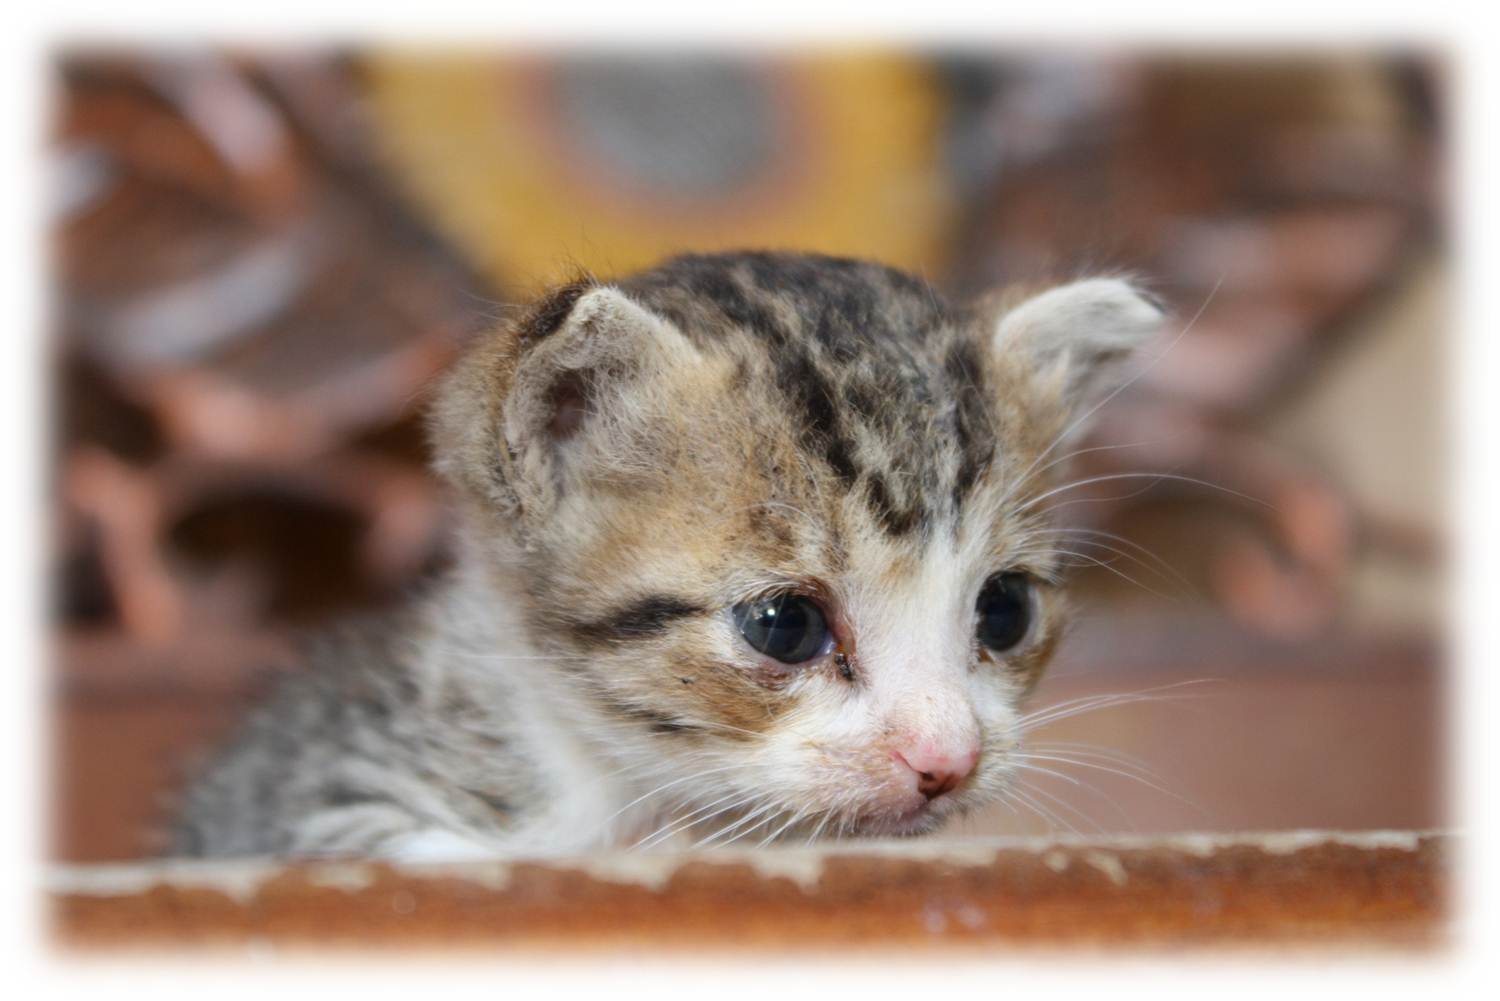 fond d'écran kucing anggora persia bergerak,chat,chats de petite à moyenne taille,félidés,chaton,chat tigré